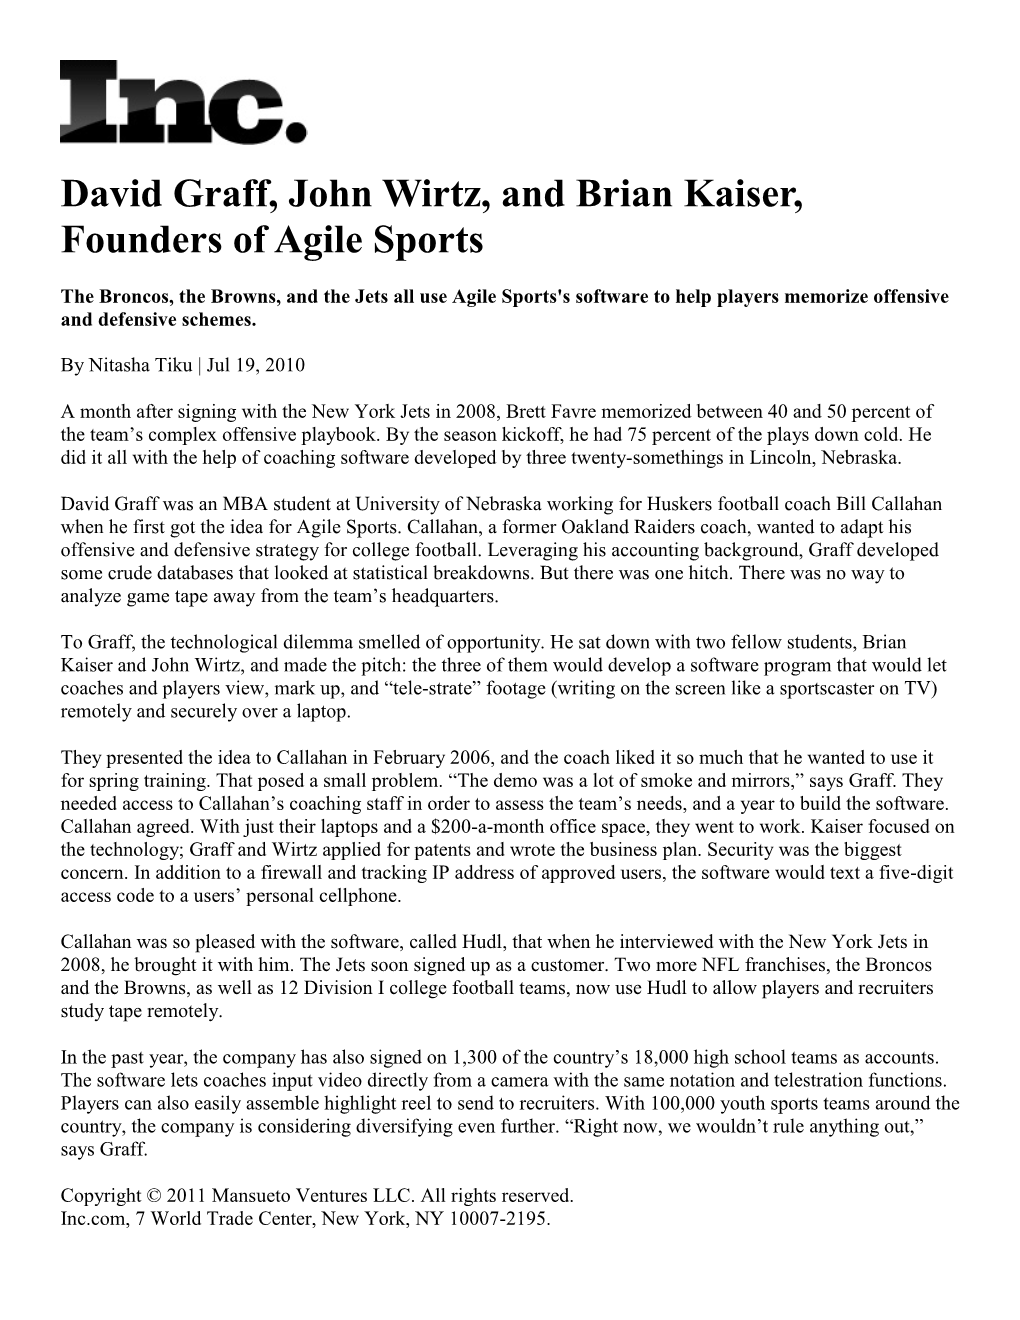 David Graff, John Wirtz, and Brian Kaiser, Founders of Agile Sports